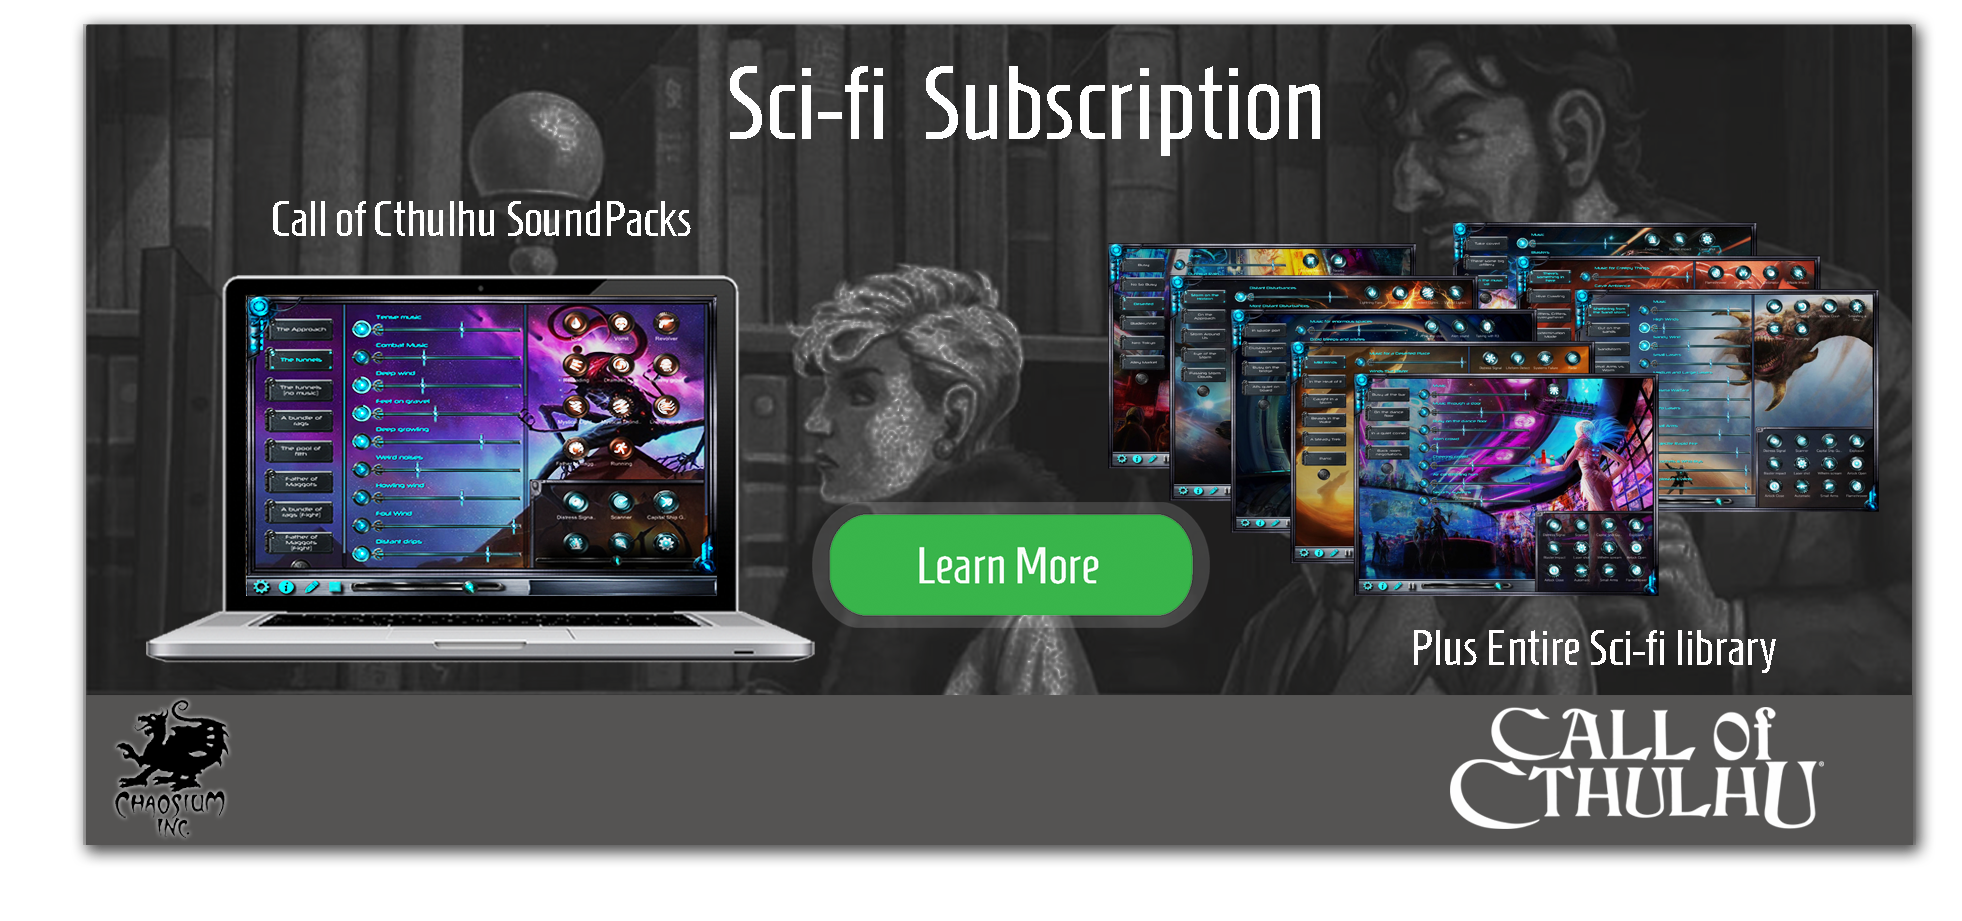 Get a Sci-fi subscription